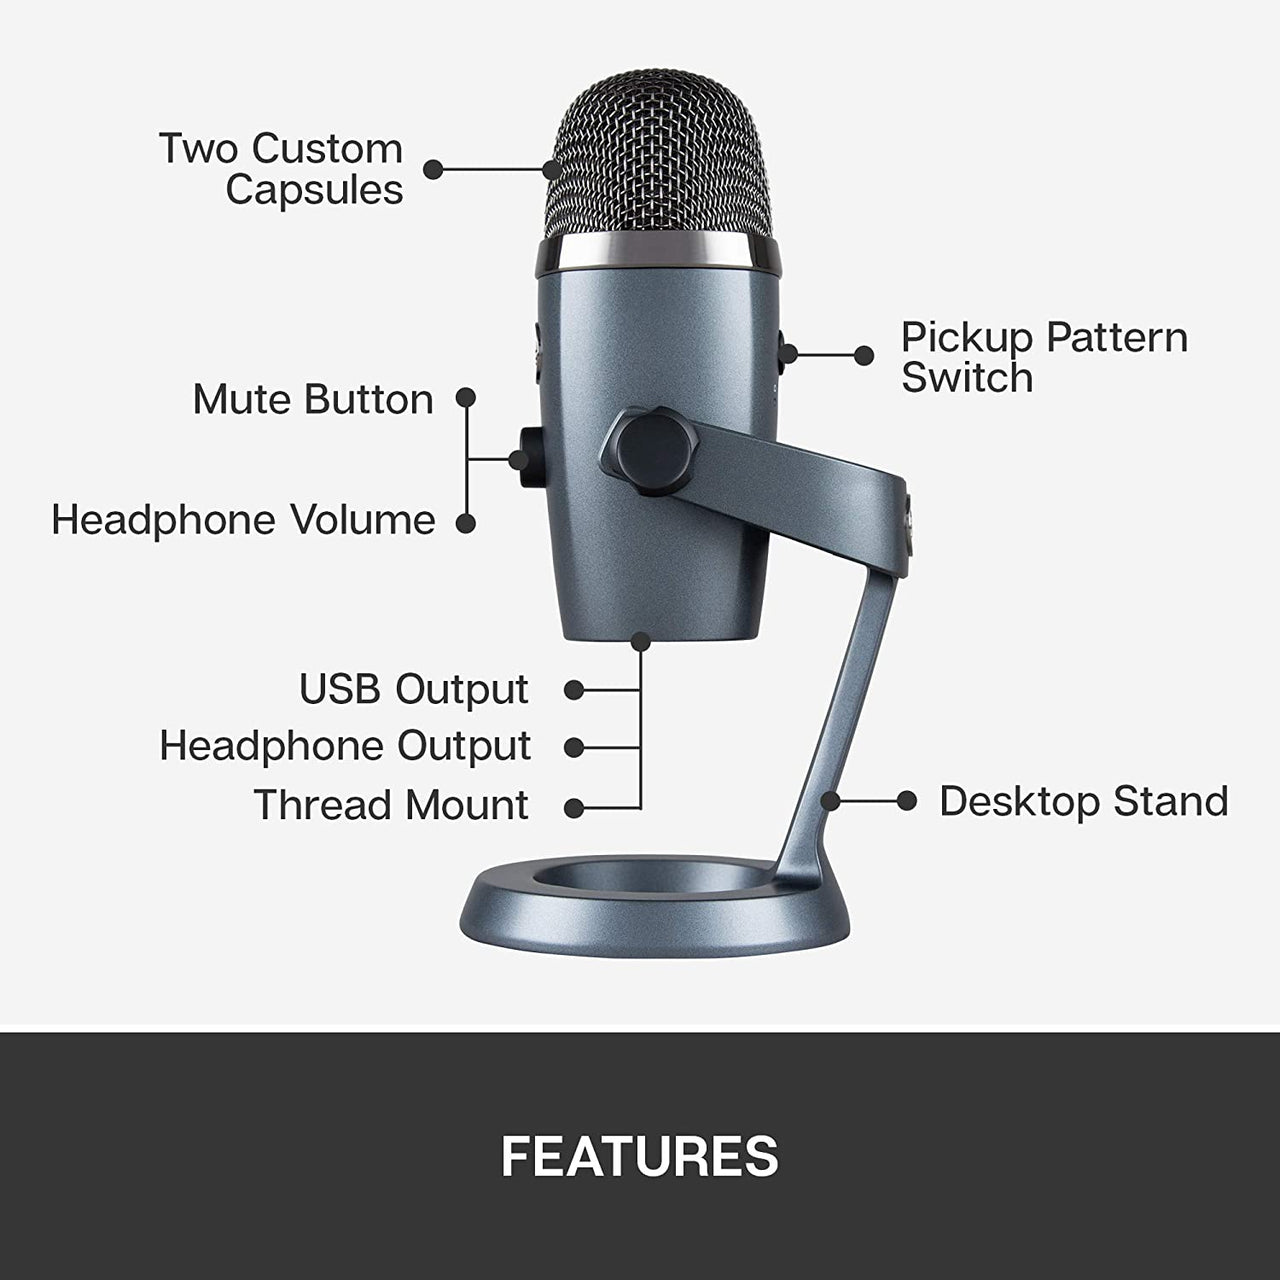 Yeti Nano Premium Dual-Pattern USB Microphone with Blue VO!CE